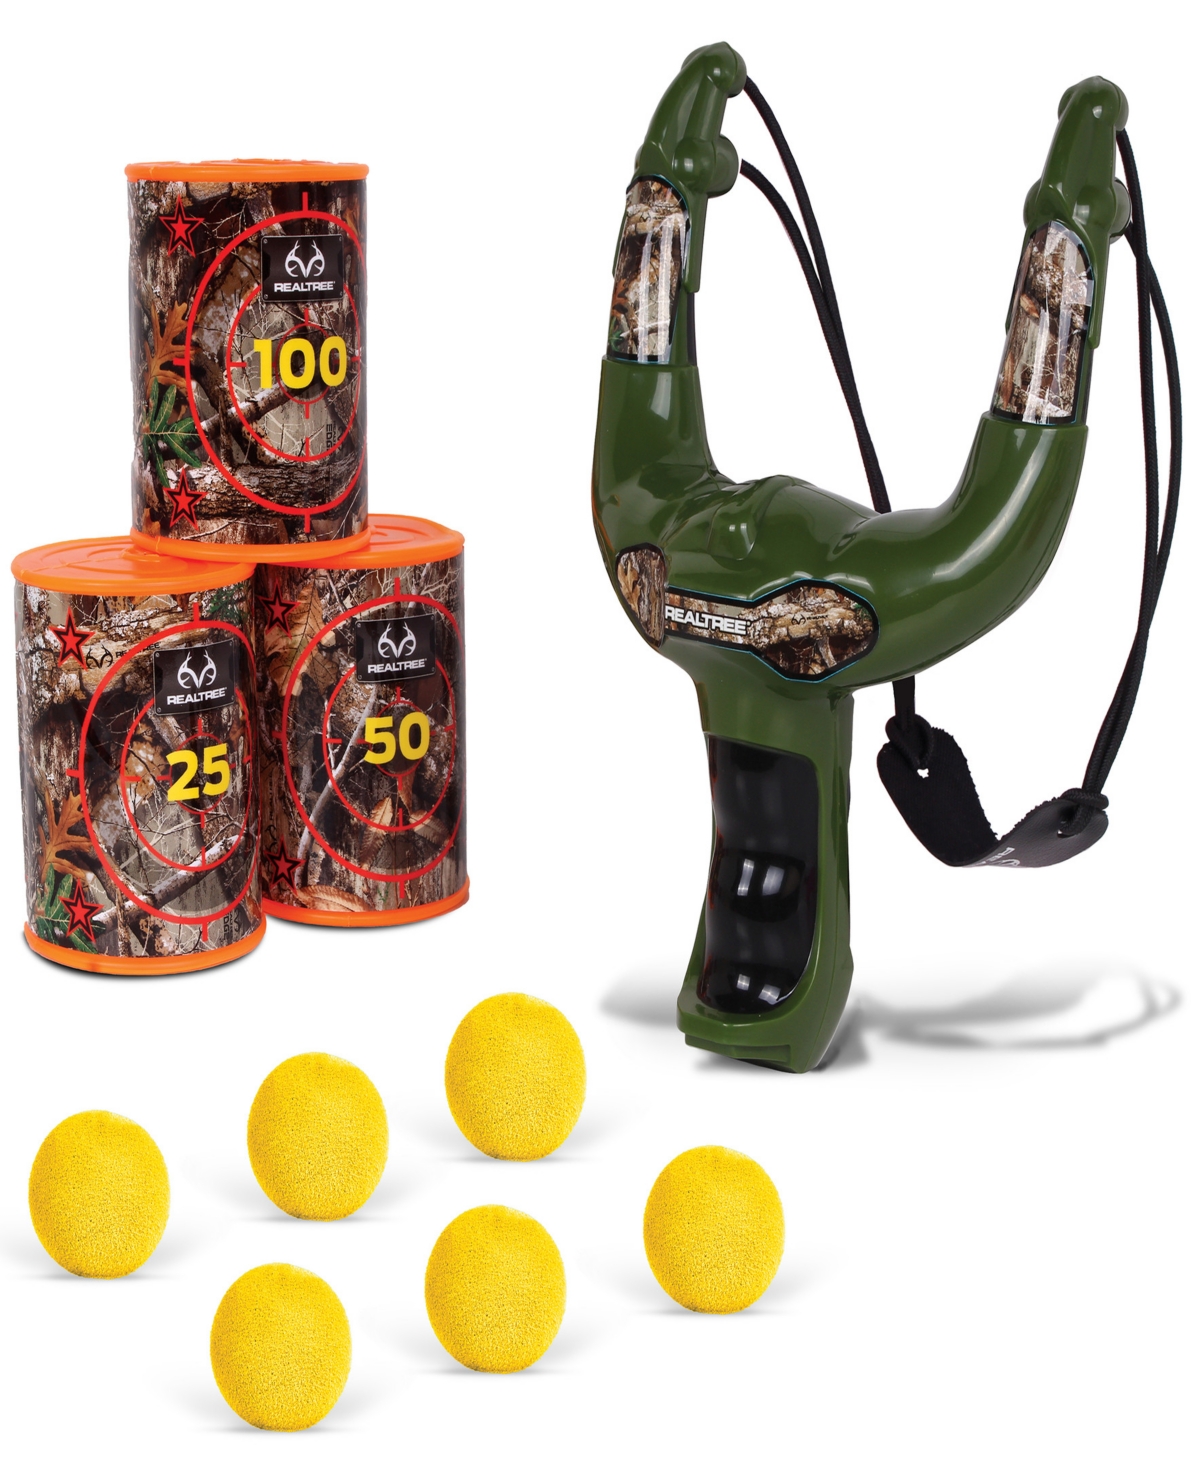 Realtree Kids' Nkok Handheld Slingshot Set Green 25037 Includes 6 Foam Balls 3 Can Targets, Toy Slingshot Shoots Up In Multi